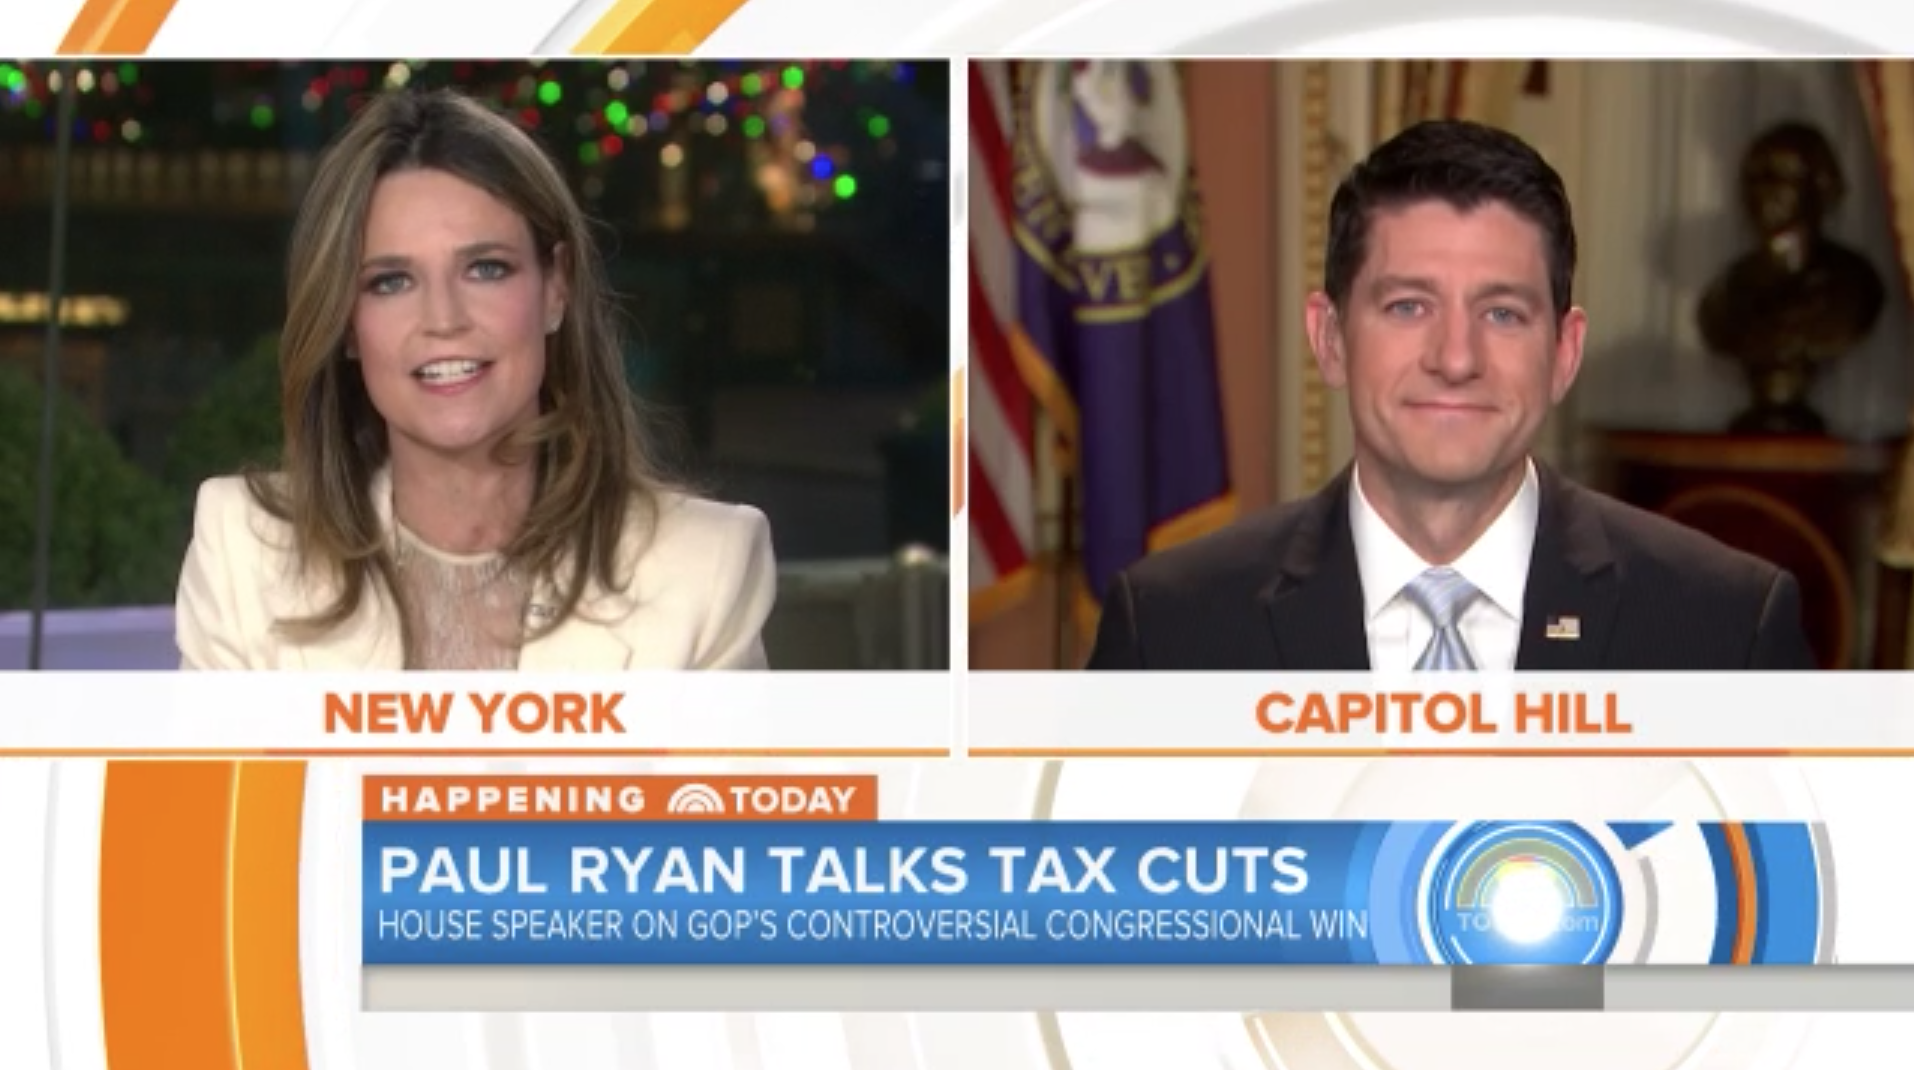 Savannah Guthrie interviews Paul Ryan.